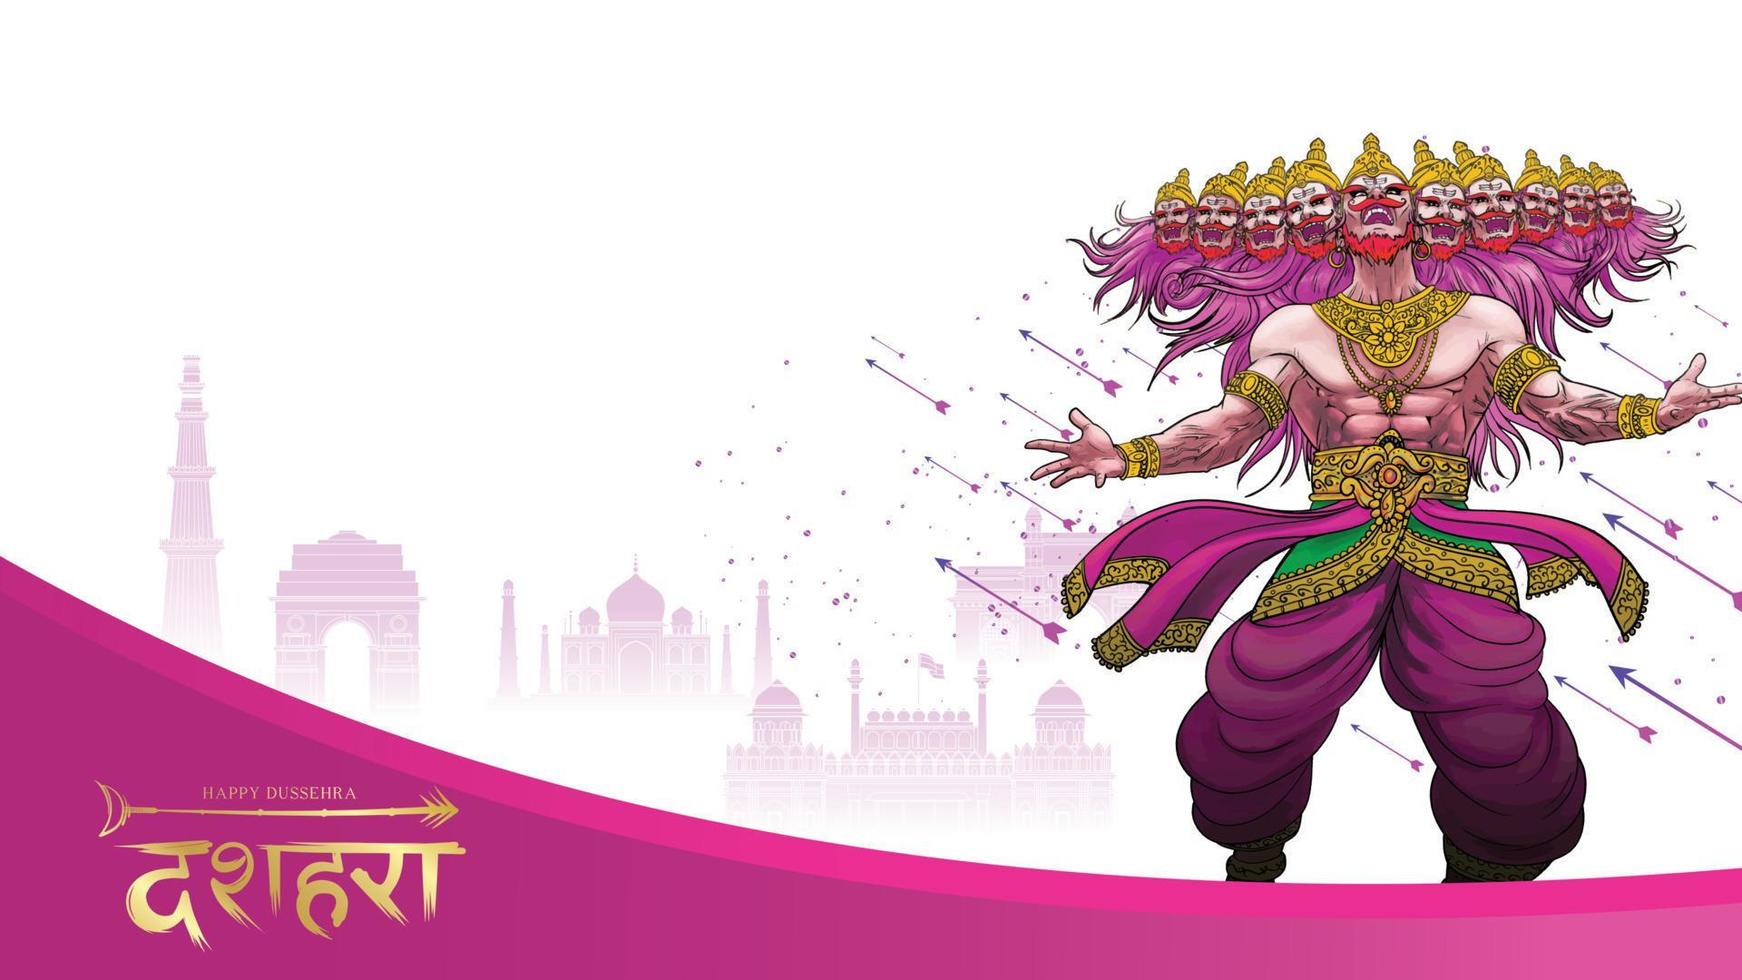 creative vector illustration of Lord Rama killing Ravana in Happy Dussehra Navratri poster festival of India. translation dussehra